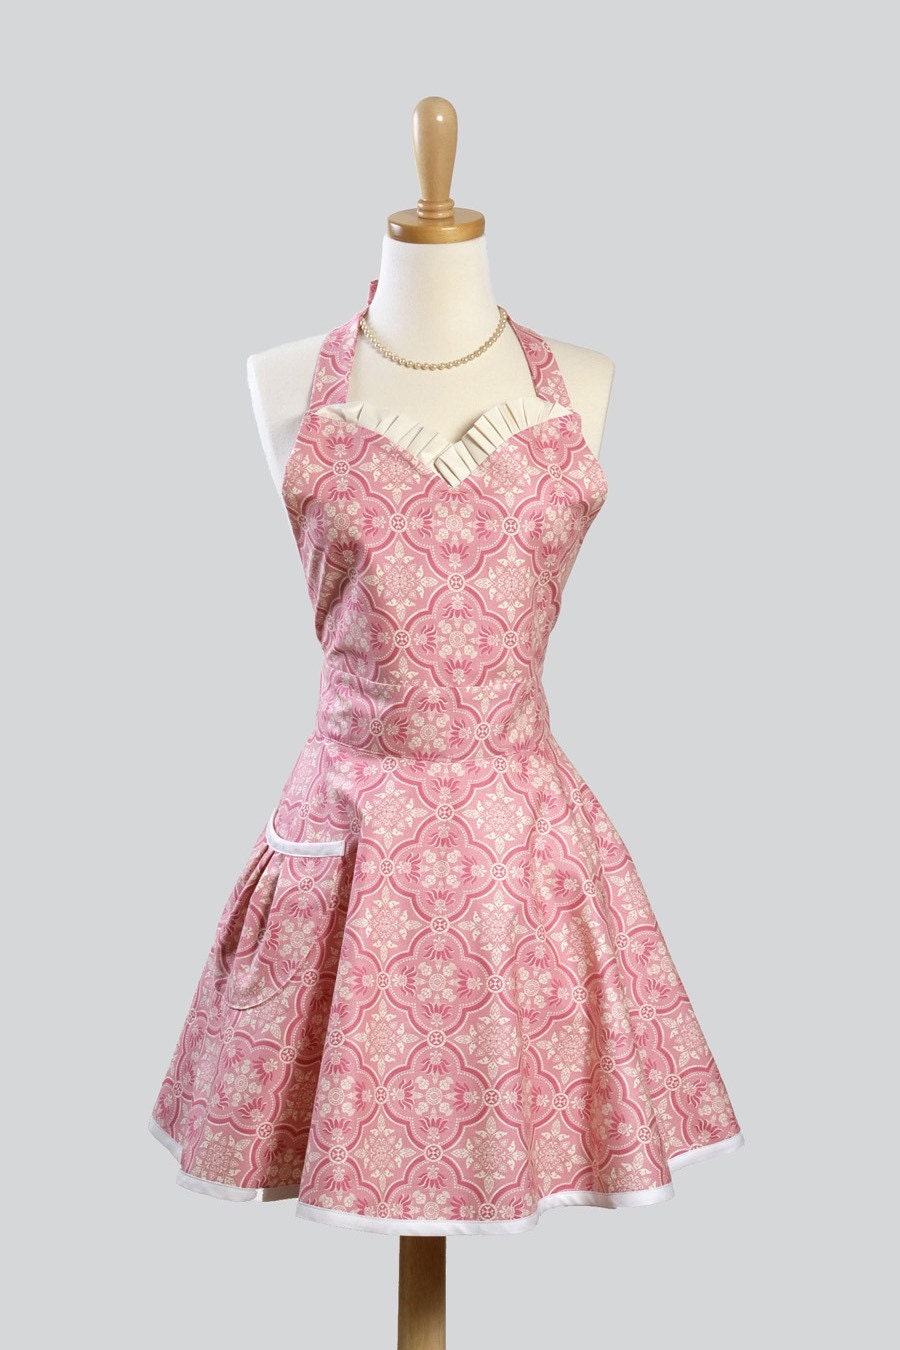 Womens Sweetheart Hostess Apron / Feminine Ruffled Sweetheart in Pastel Pink Damask for Vintage Appeal